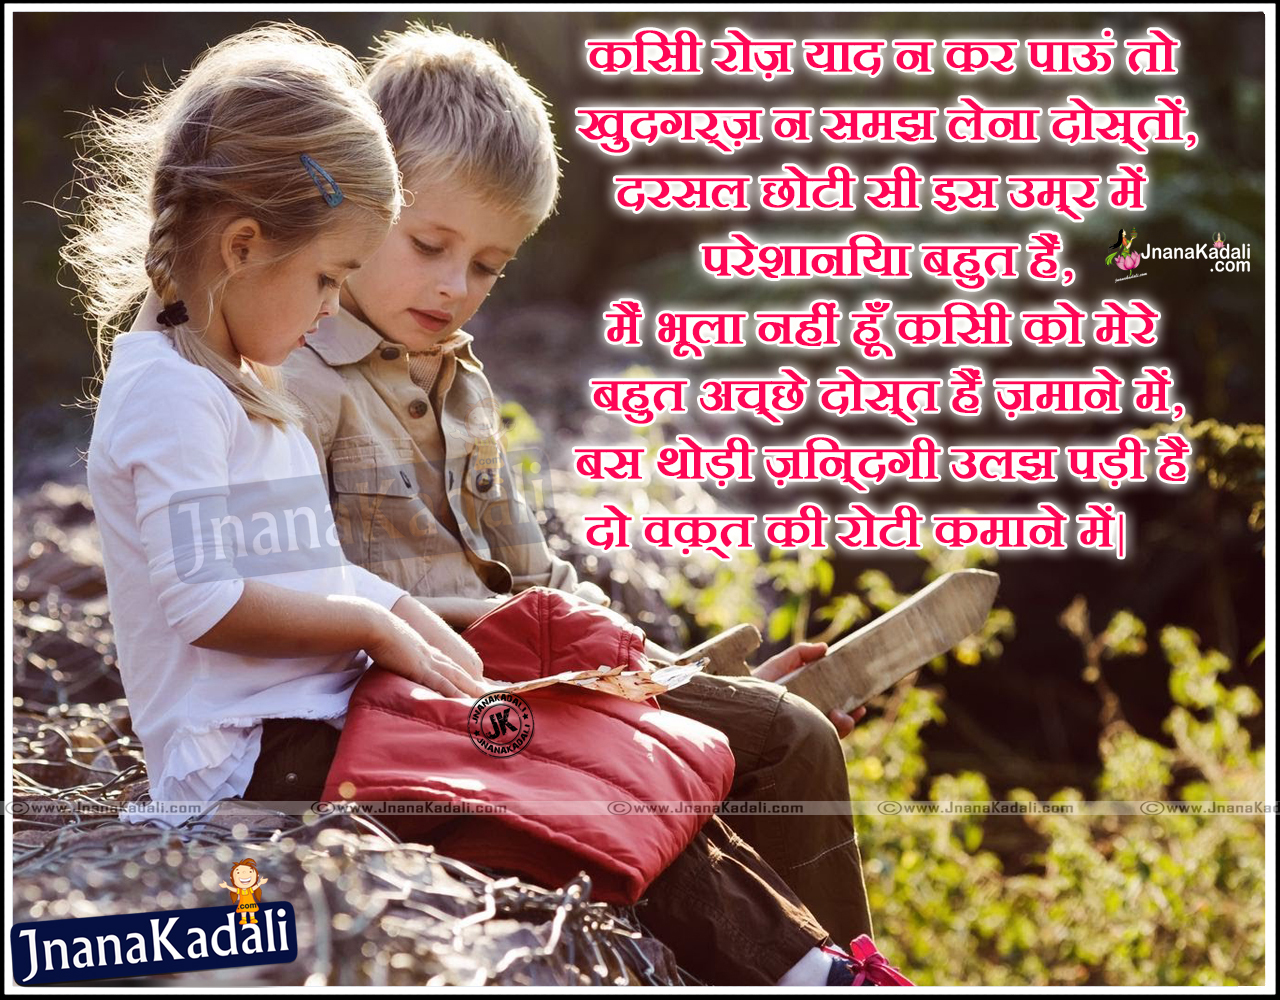 Excellent Hindi Friendship or Dosti Shayari Images | JNANA KADALI.COM